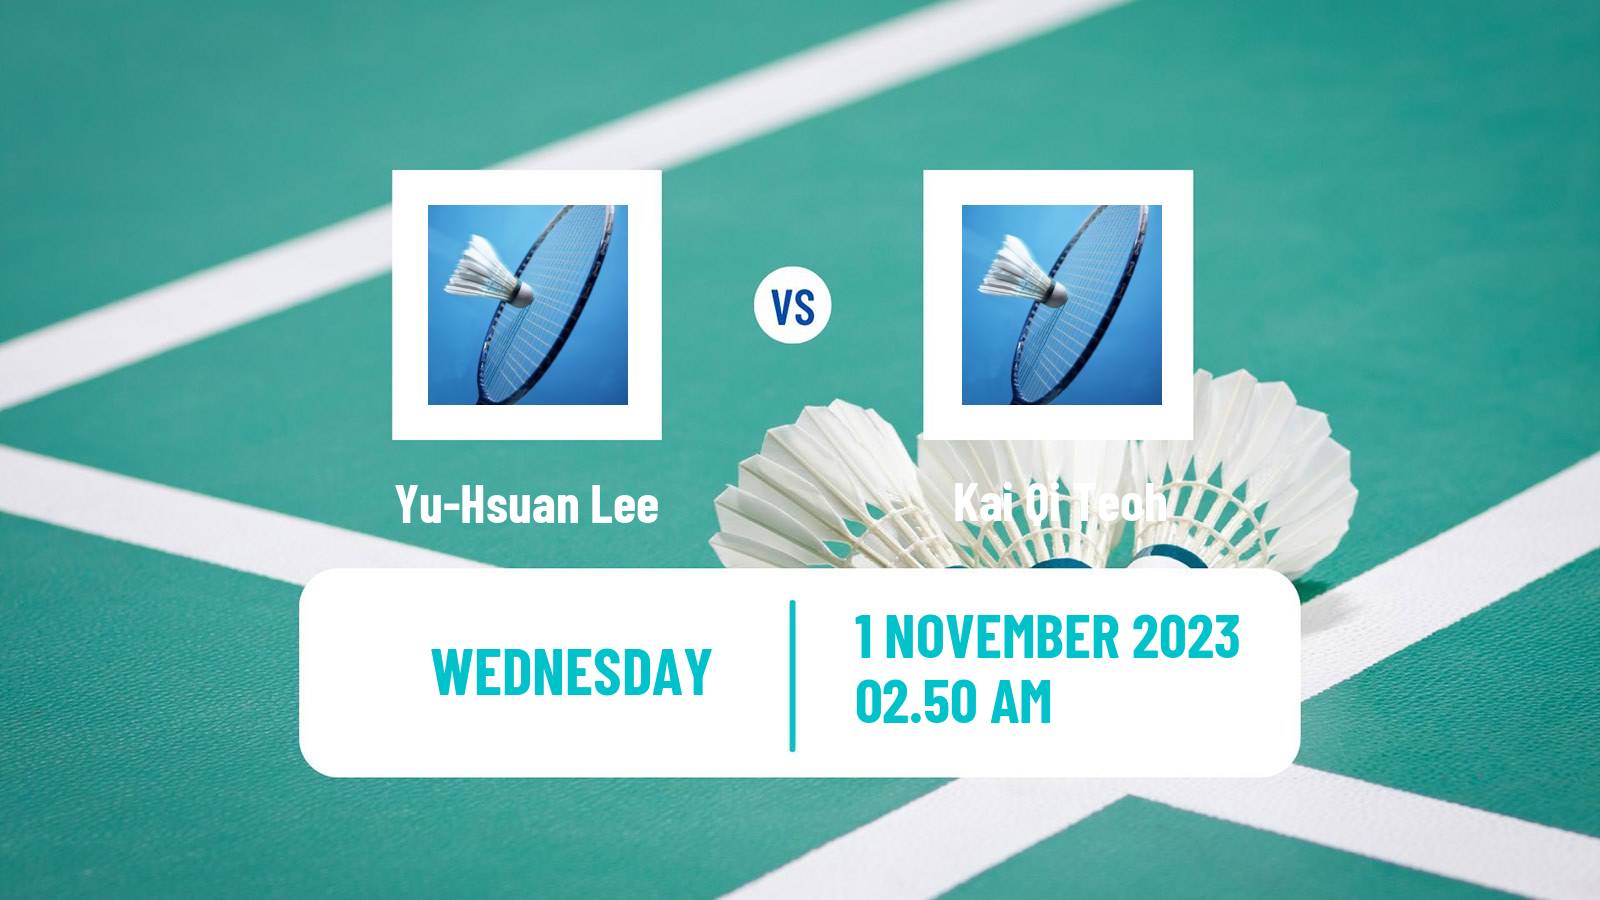 Badminton BWF World Tour Kl Masters Malaysia Super 100 Women Yu-Hsuan Lee - Kai Qi Teoh